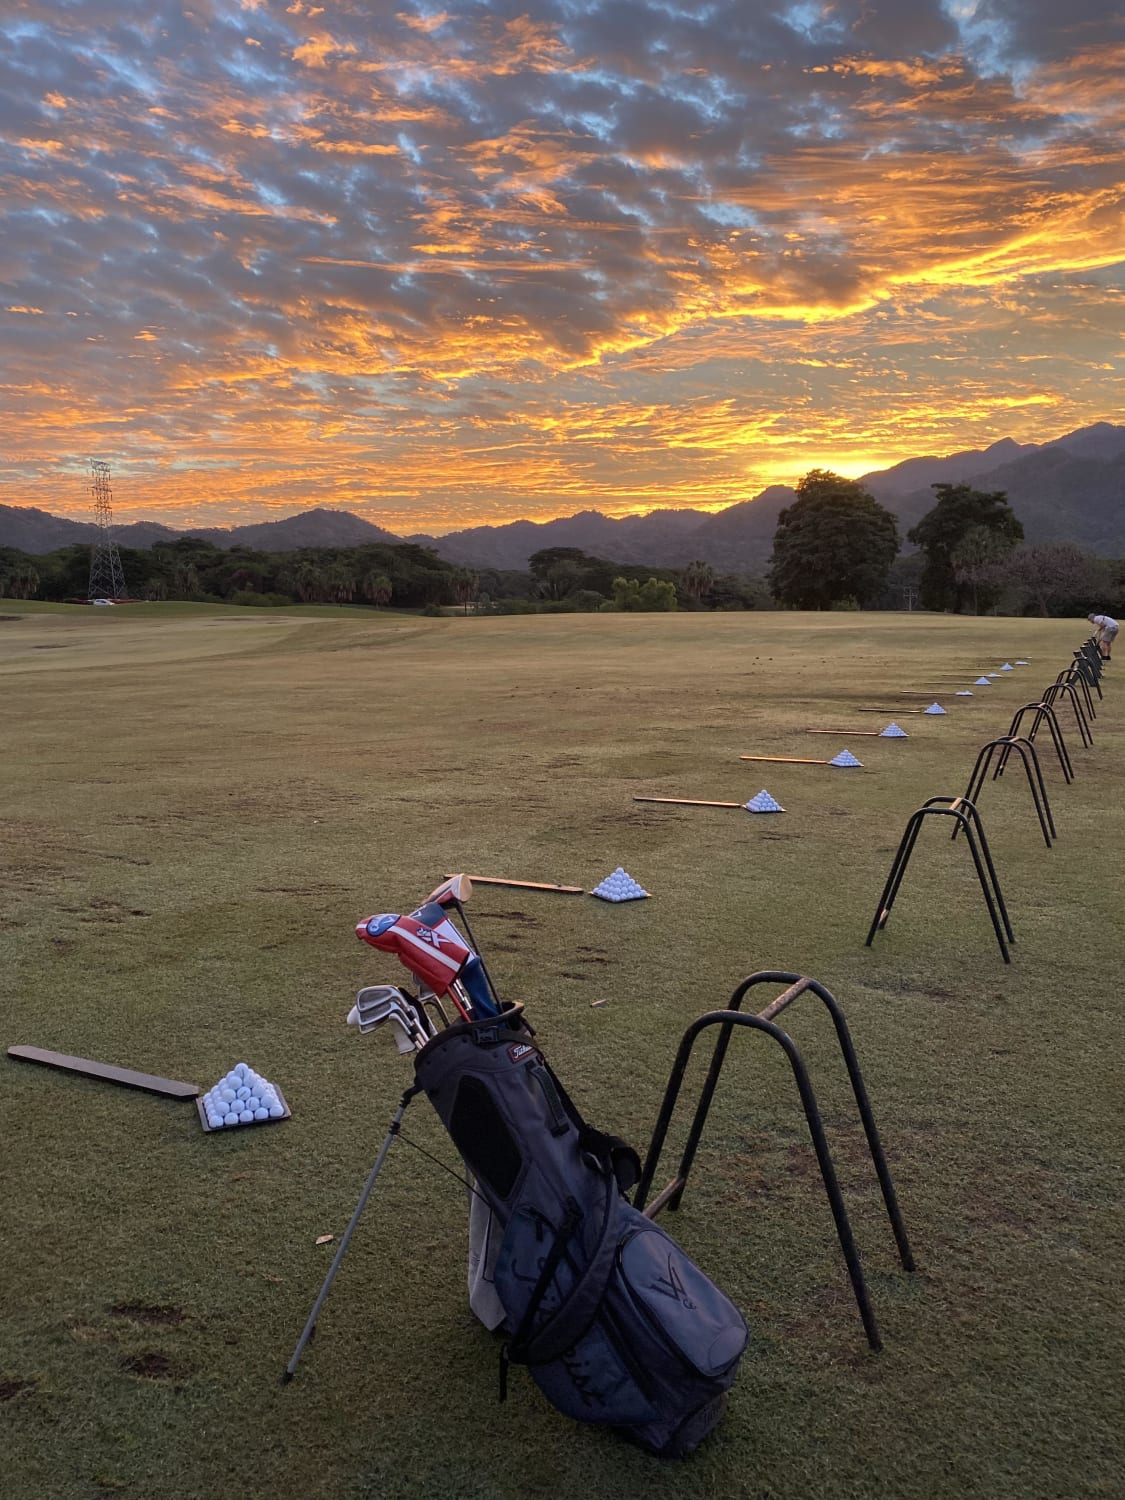 My practice view this morning 😍 - Vista Vallarta Club de Golf, Puerto Vallarta, Mexico